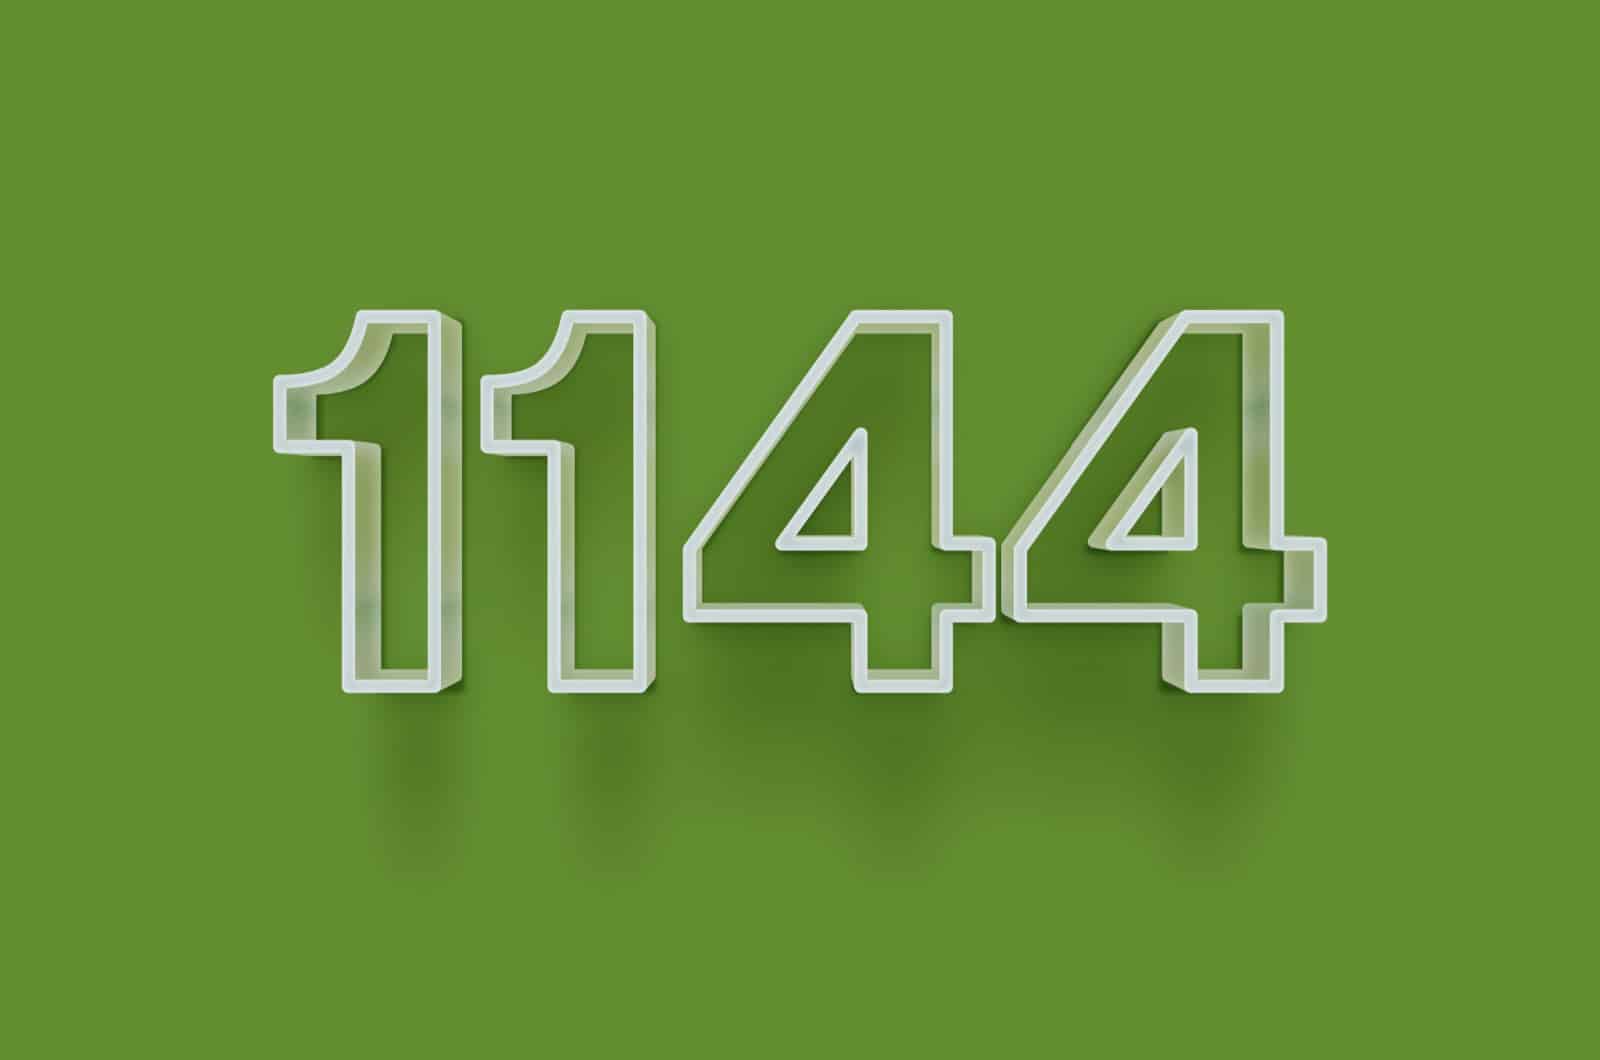 numéro 1144 sur fond vert